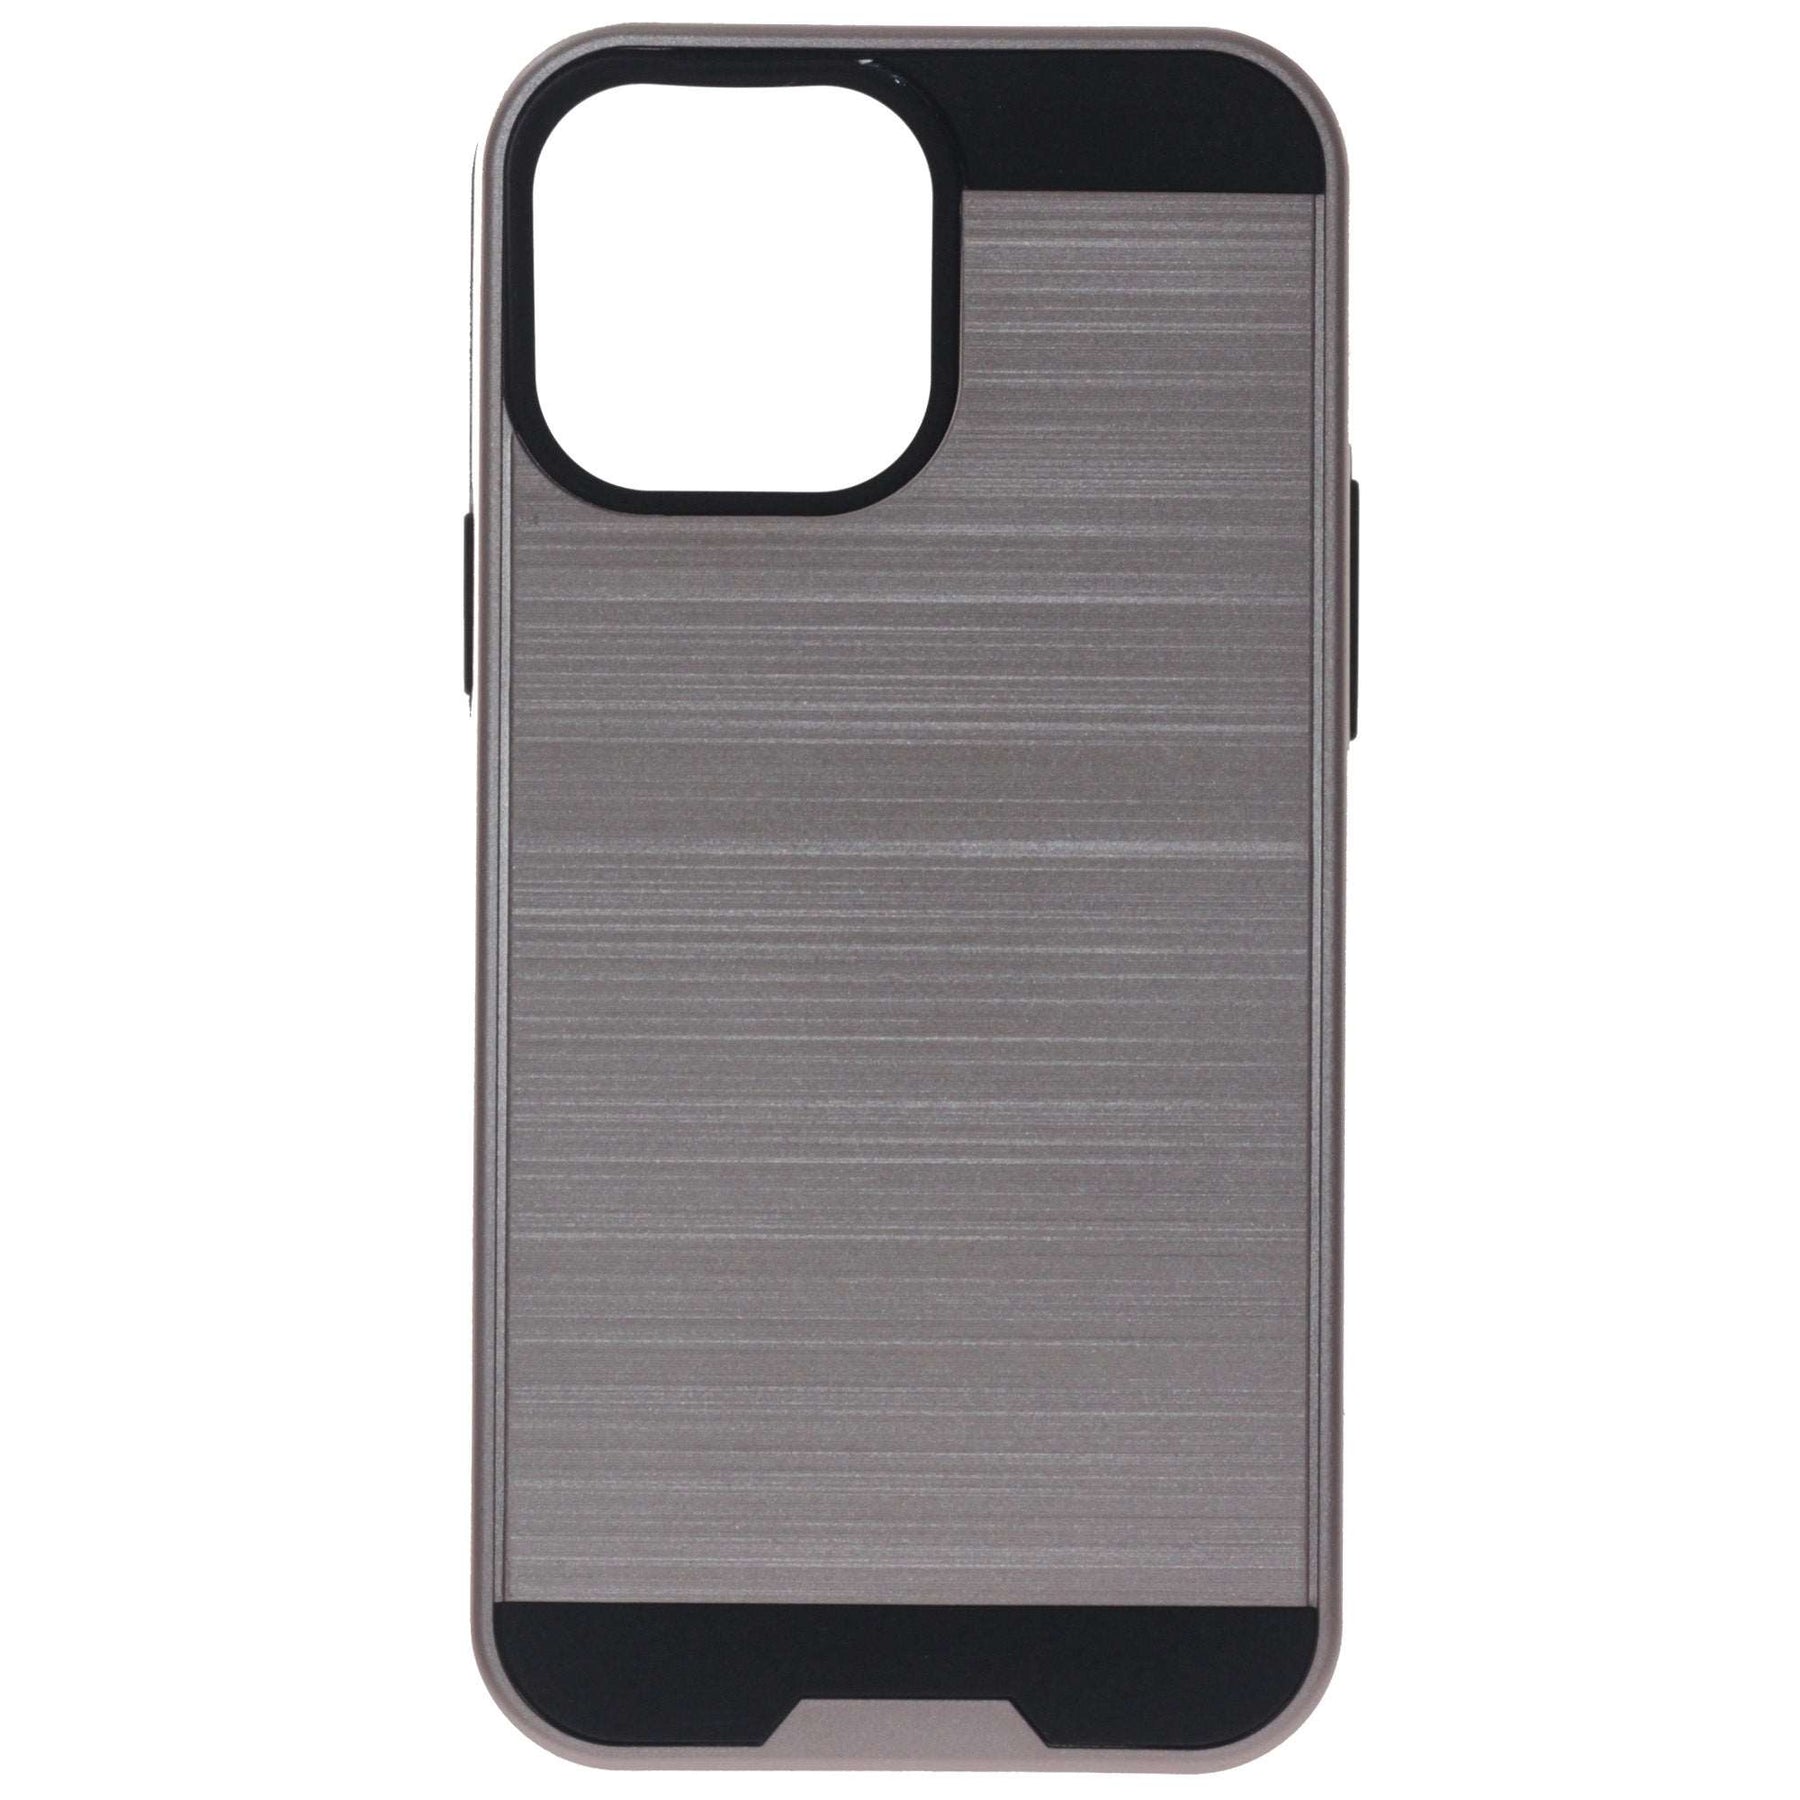 Apple iPhone 13 Pro Max Case, Slim Armor Case, Color Gold.